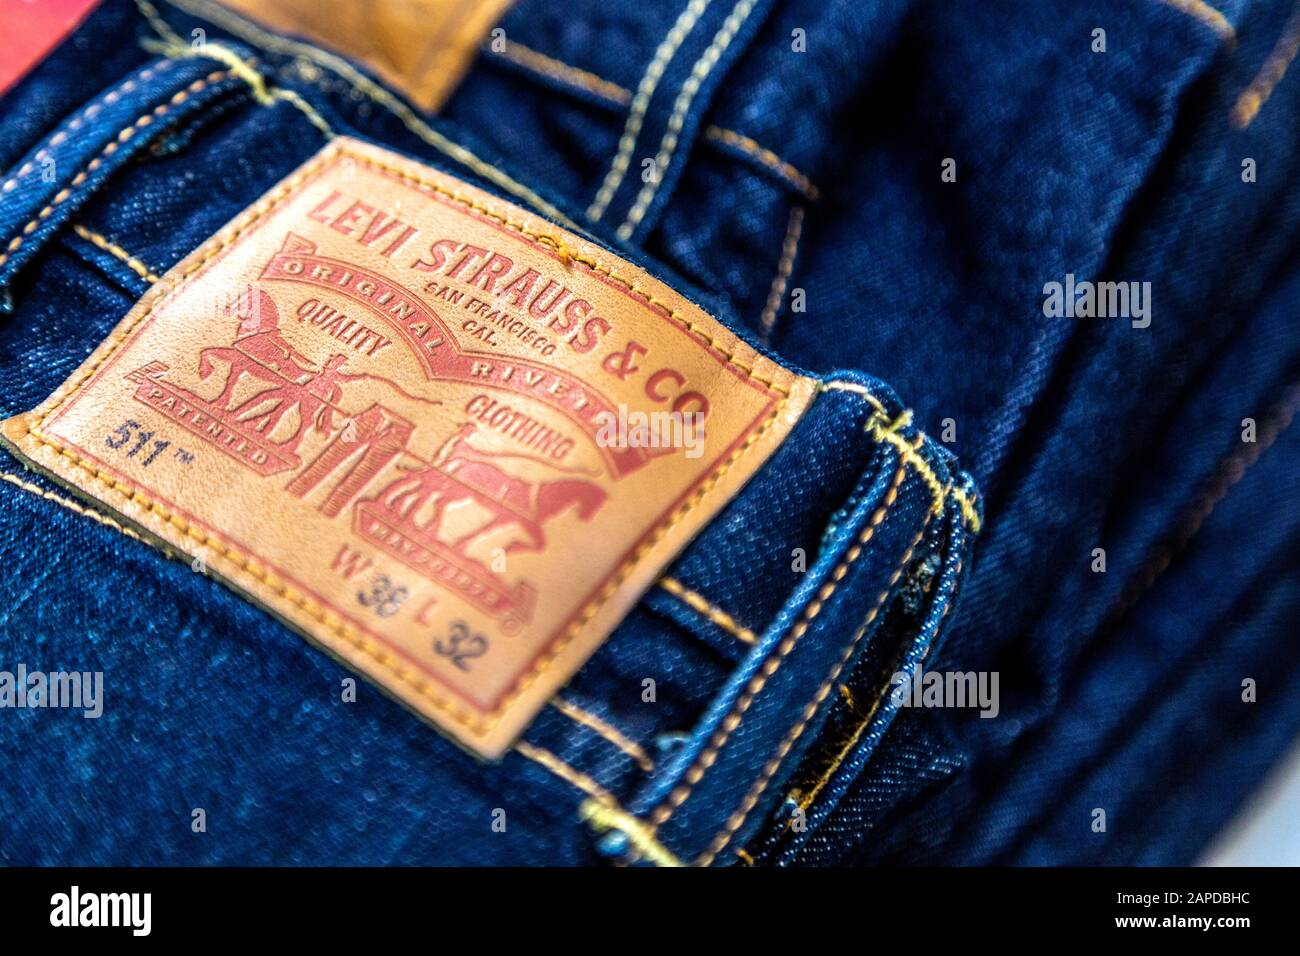 original levis jeans price